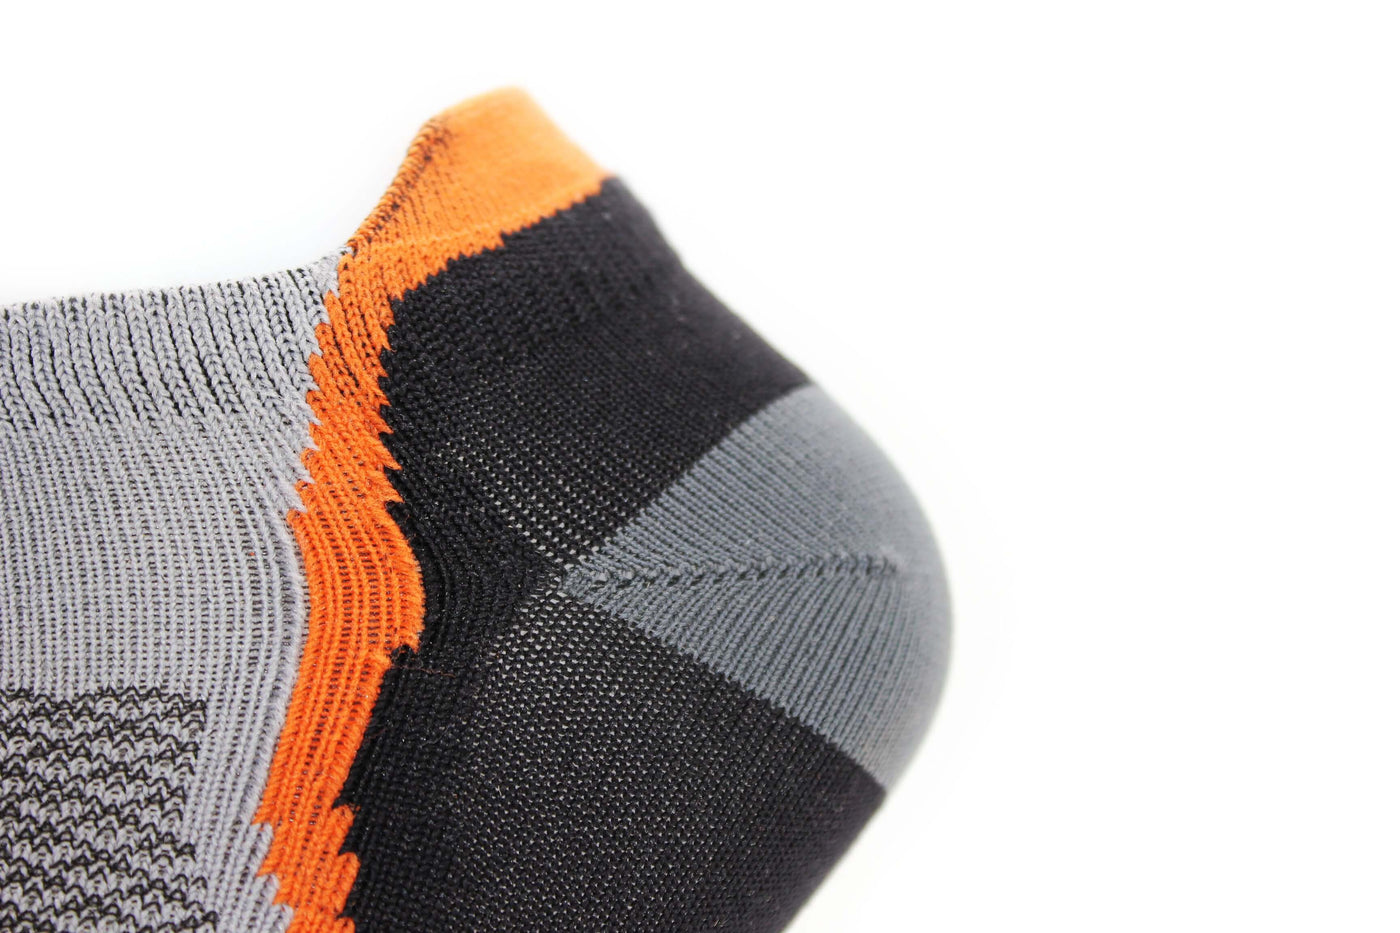 Climbing socks Ⓓ - YY Vertical